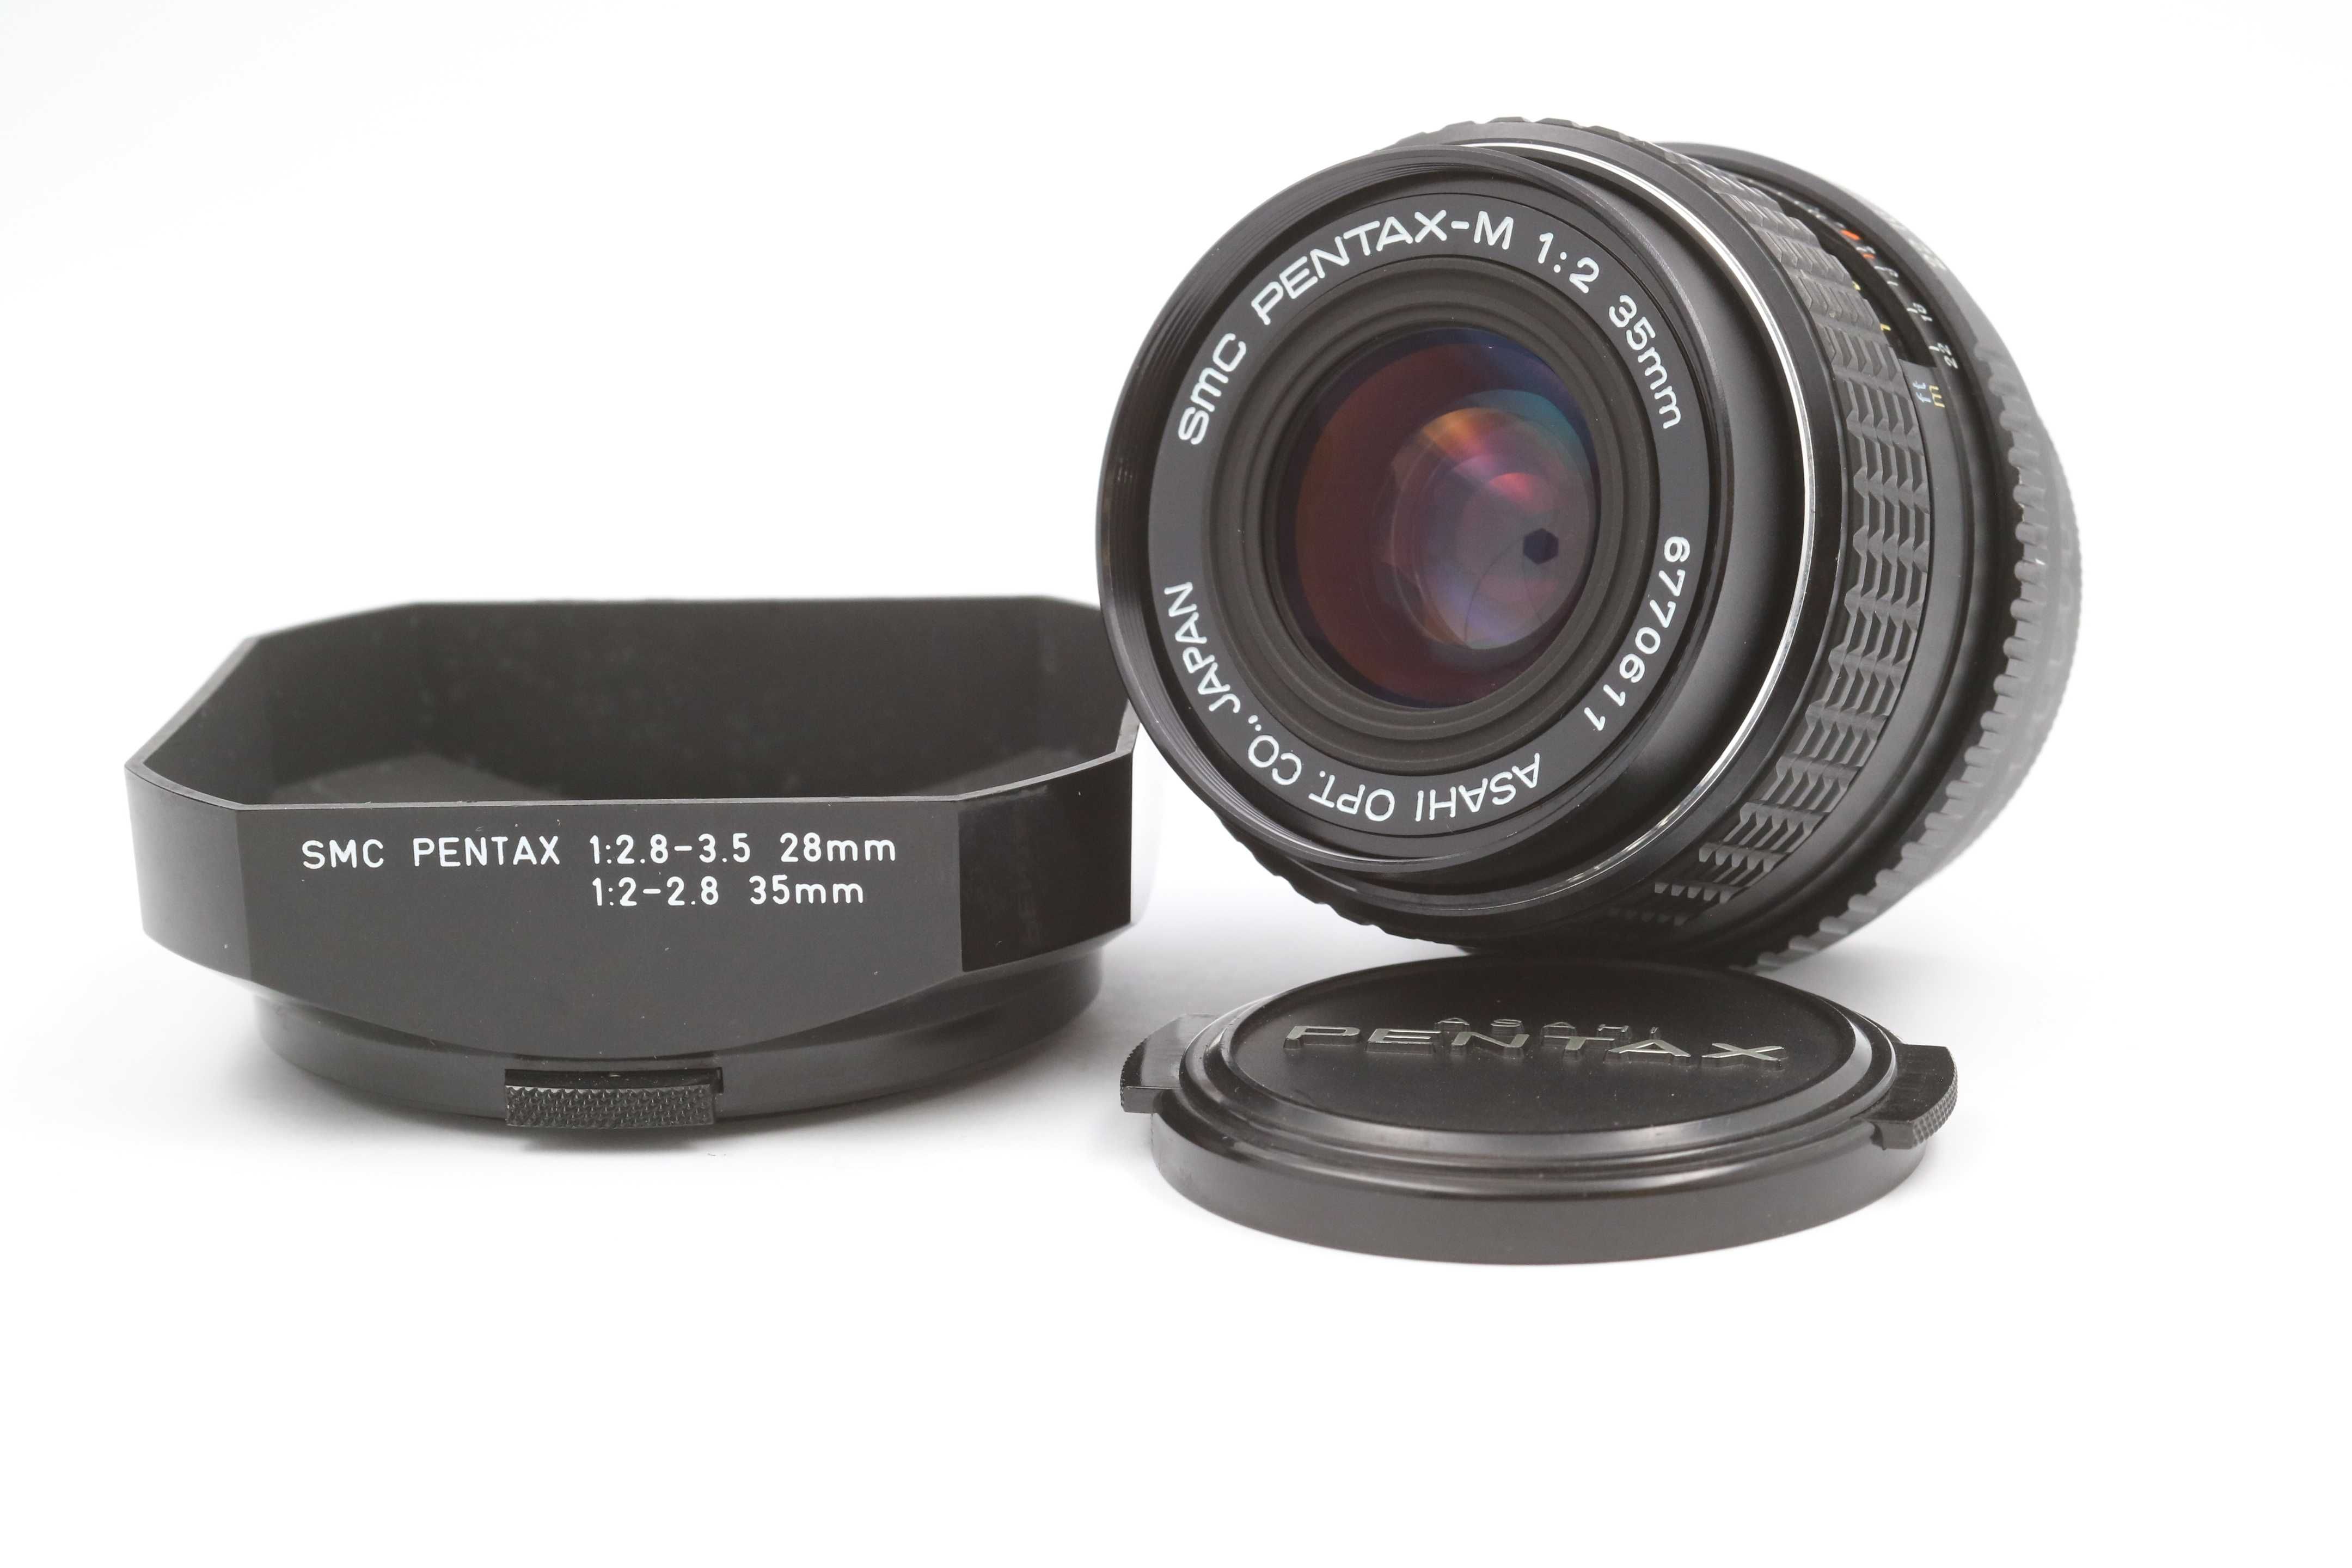 SMC Pentax-M 35mm f2.0